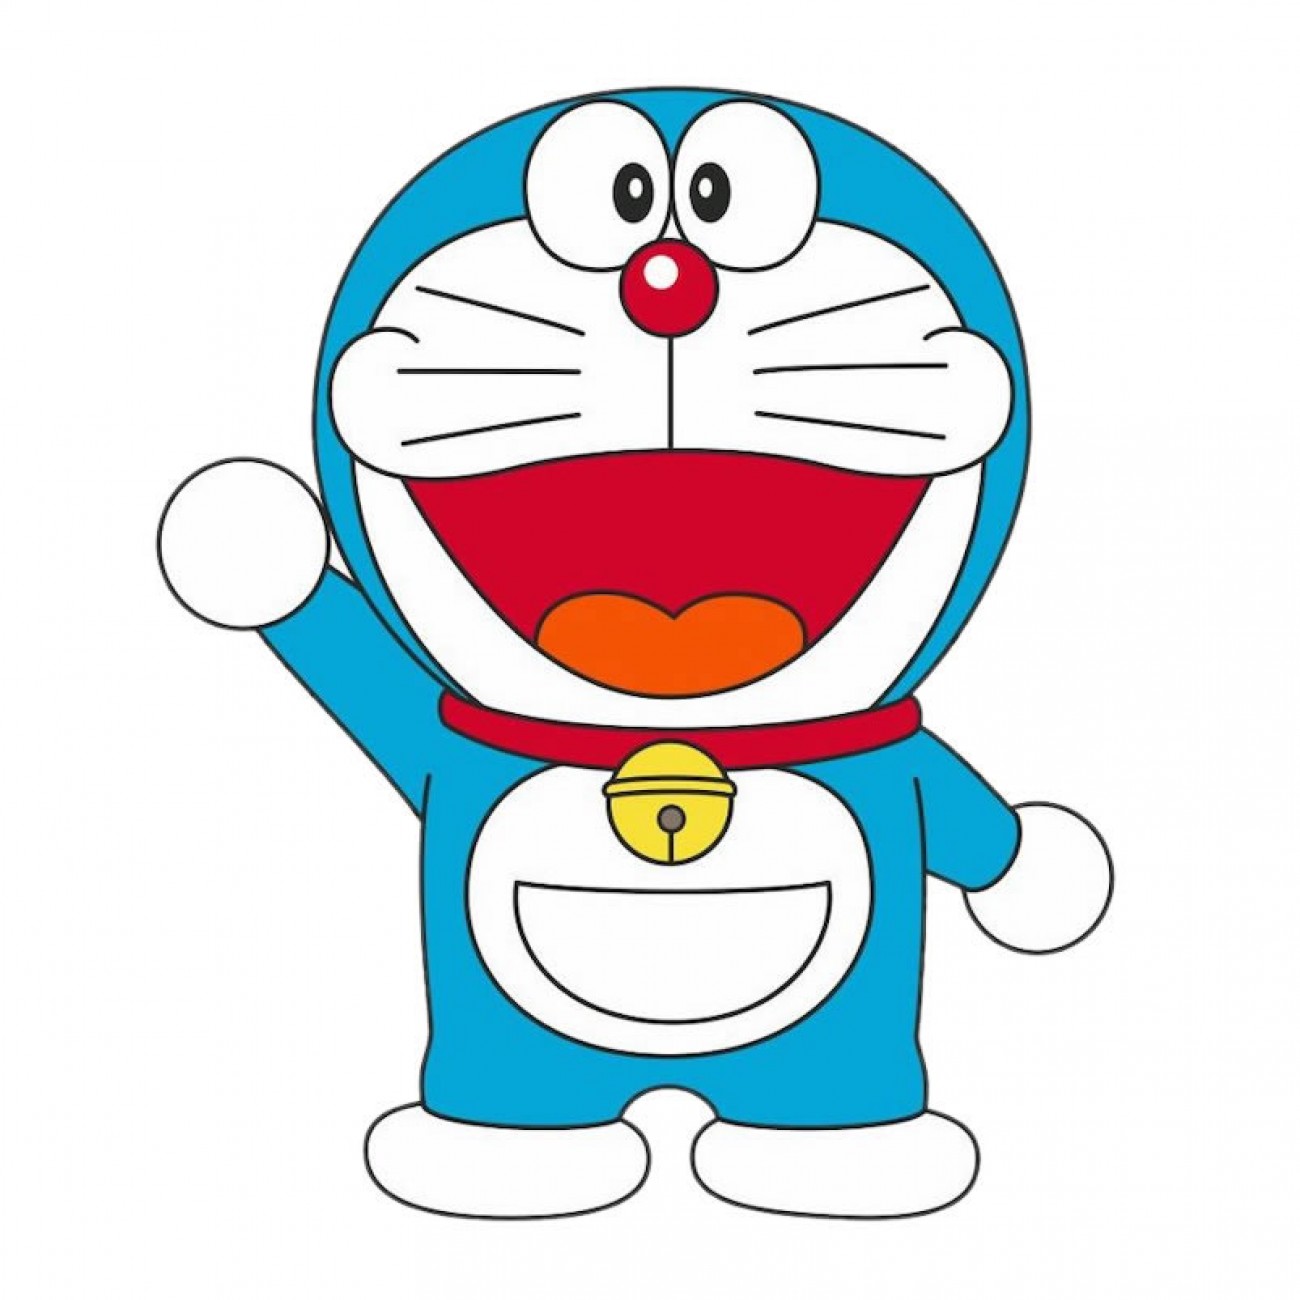 Nike SB Dunk High "Doraemon" New Release Date CI2692-400